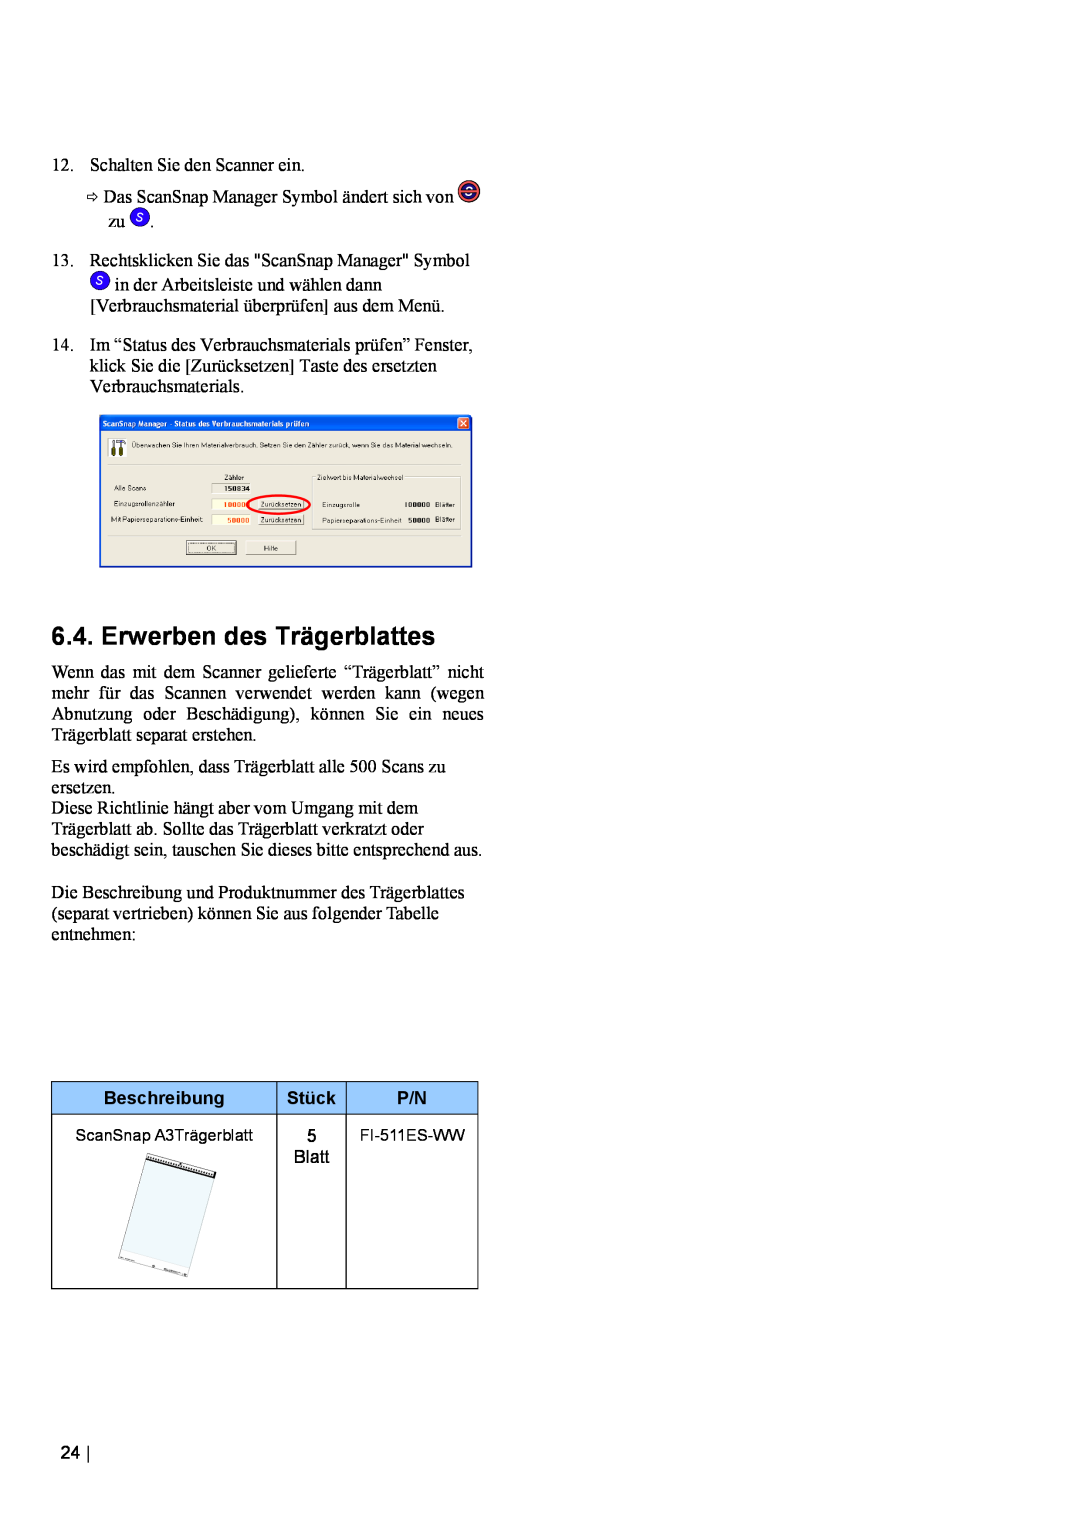 Fujitsu fi-5110EOX2 manual Erwerben des Trägerblattes, Beschreibung, Stück 